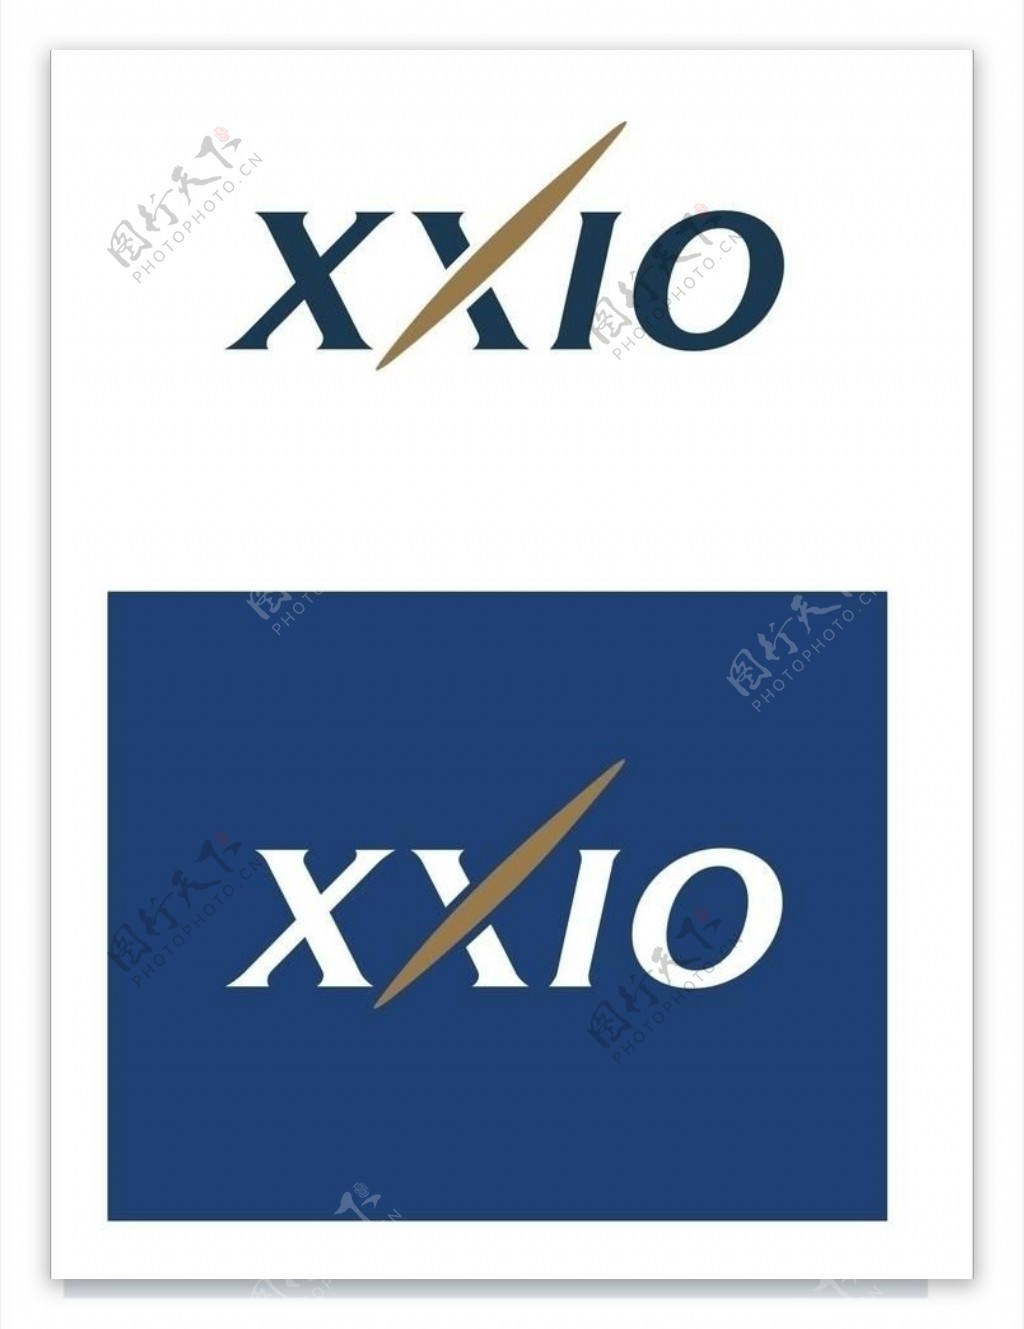 xxio矢量logo图片